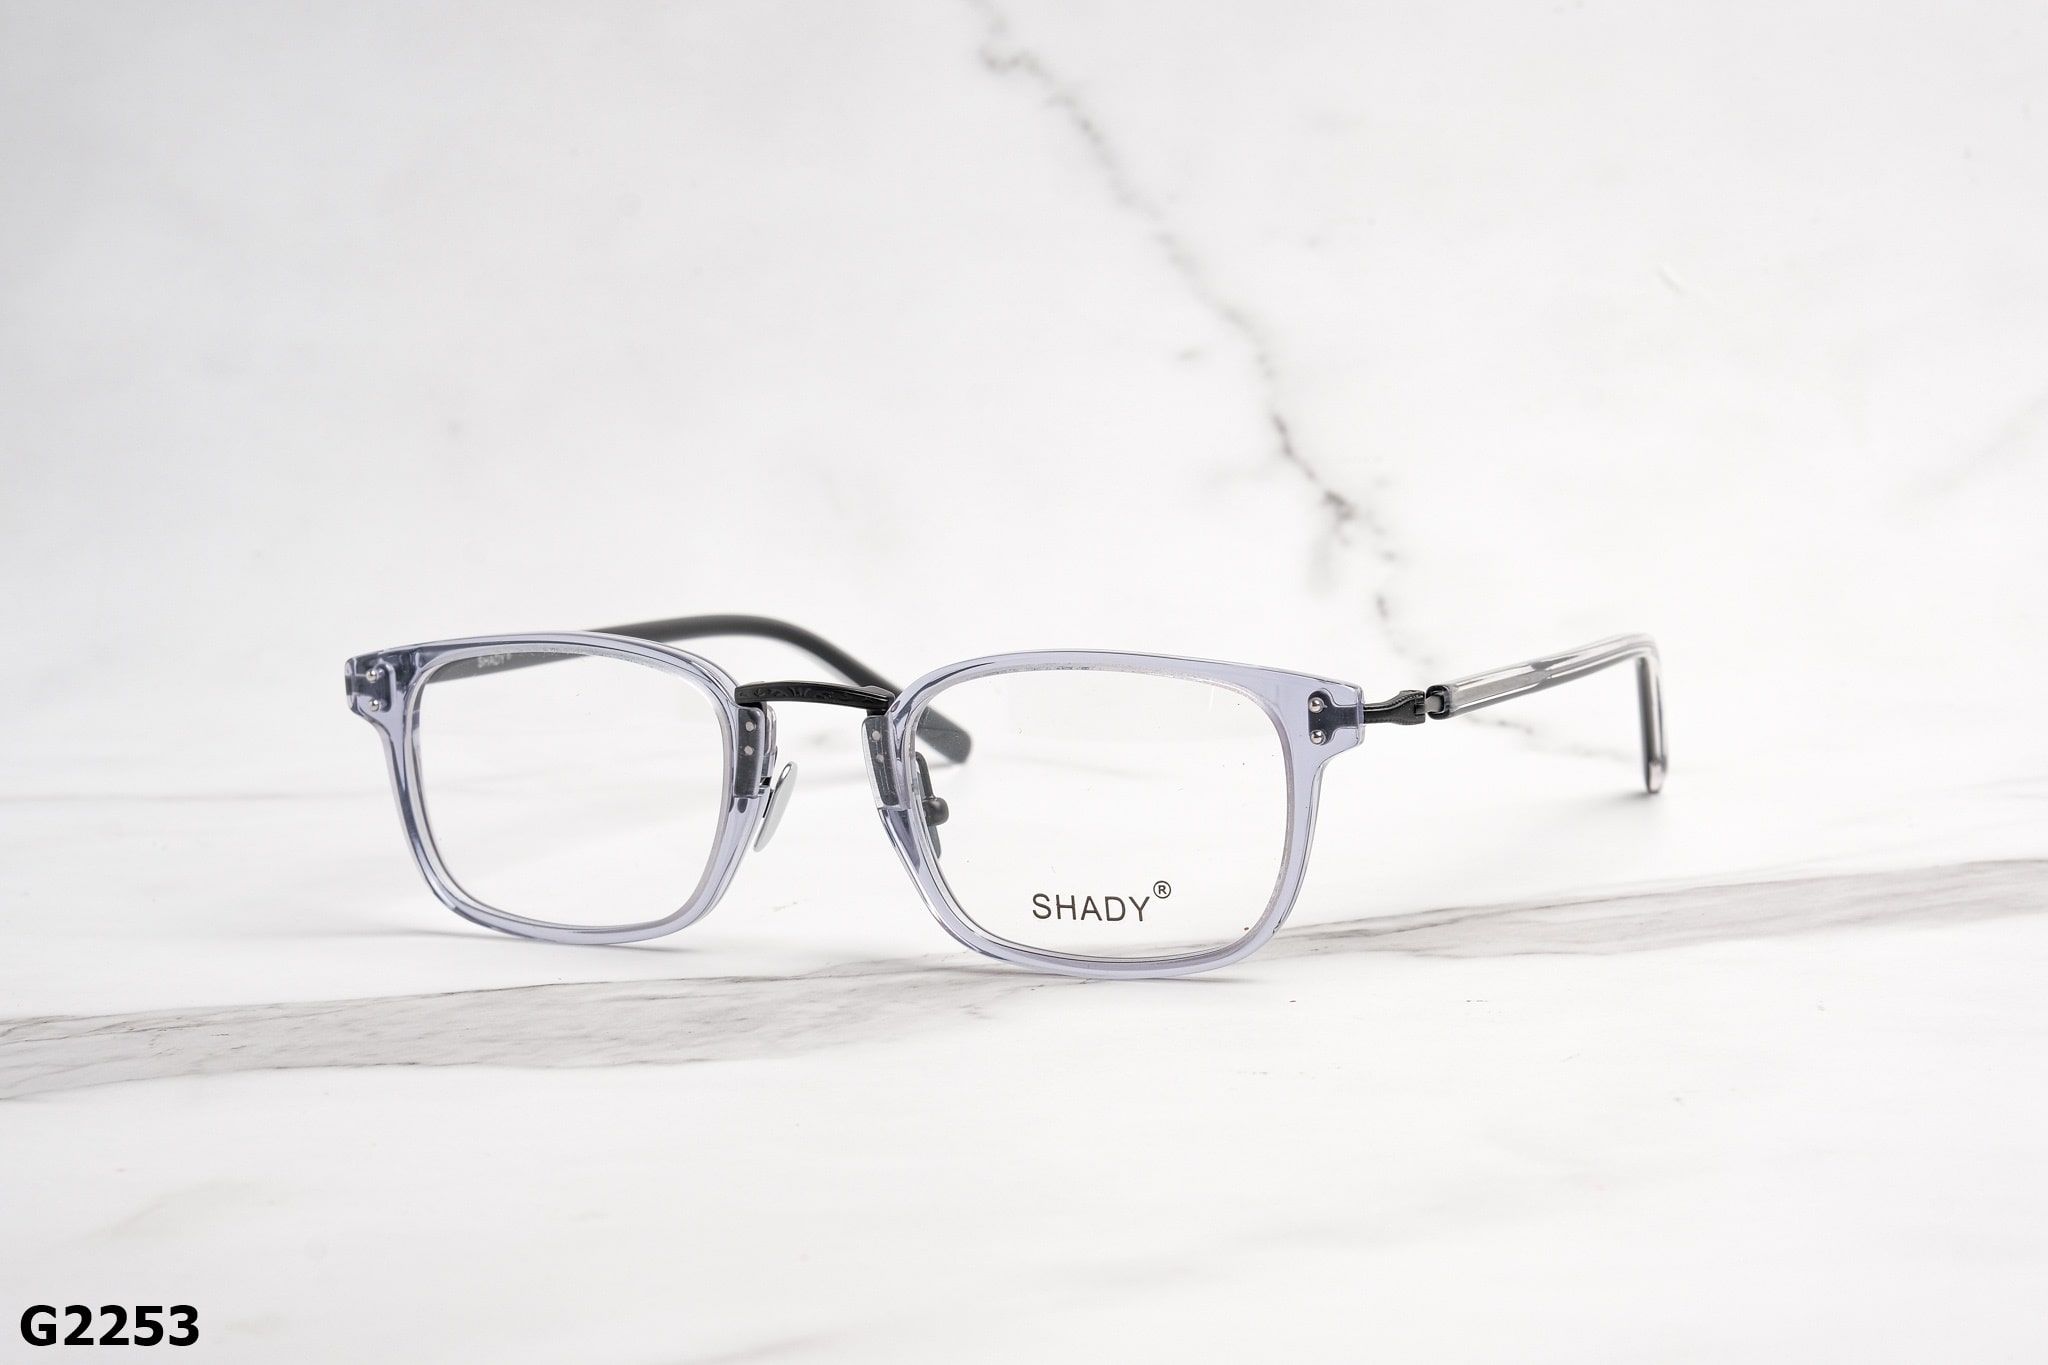  SHADY Eyewear - Glasses - G2253 